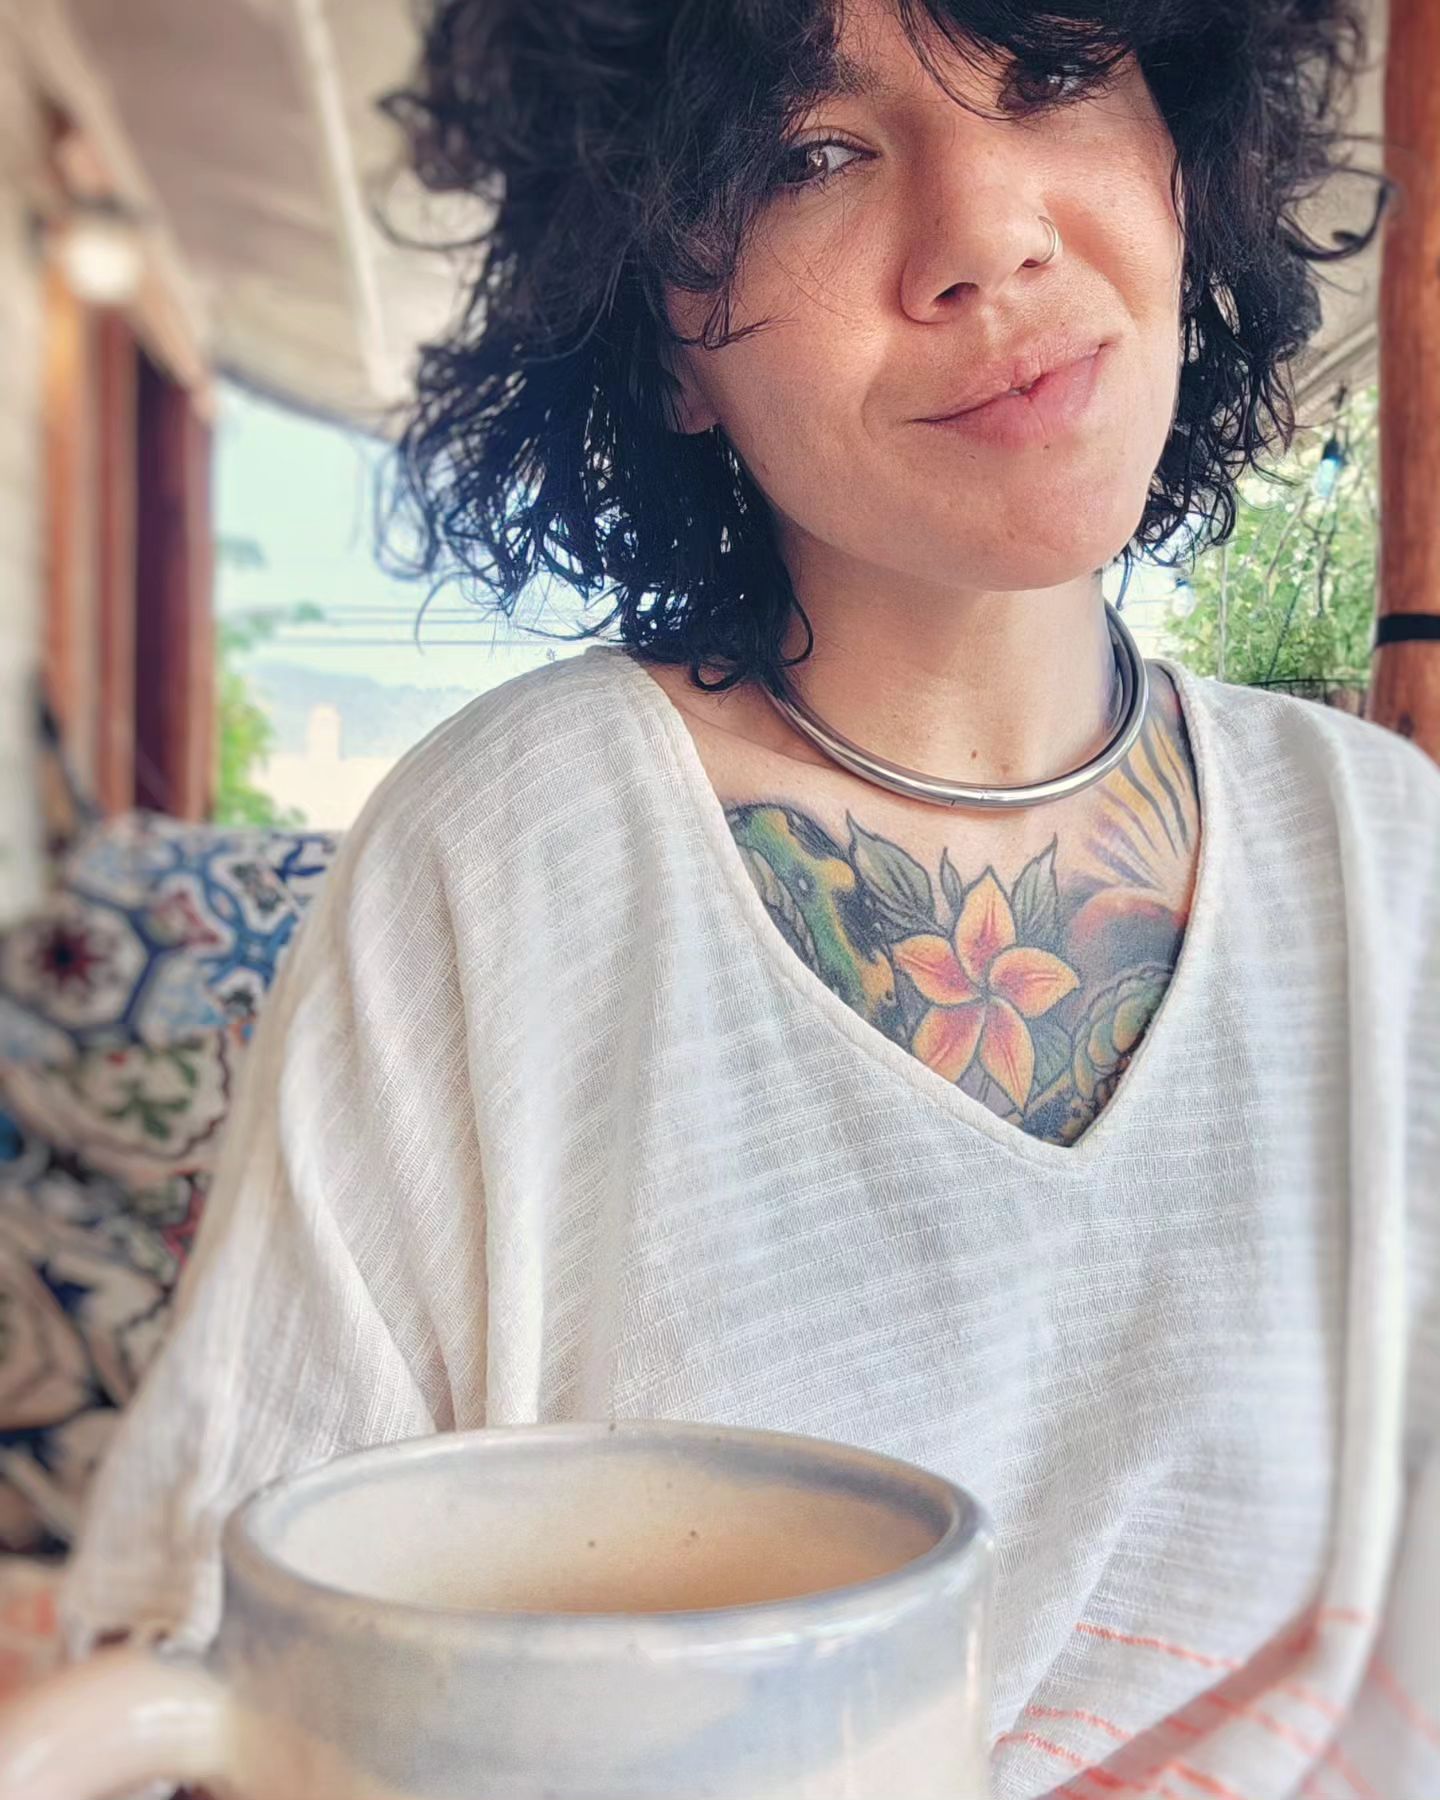 morning is just the time of day when there is coffee - so what if it's 1pm, good morning!

#coffeecoffeecoffee #goodmorning #aussiesofinstagram #bedhead #australianshepherd #hippiegirl #alternativegirl #dogsofinstagram #modelgirl #contentcreator #streamergirl #pnwonderland